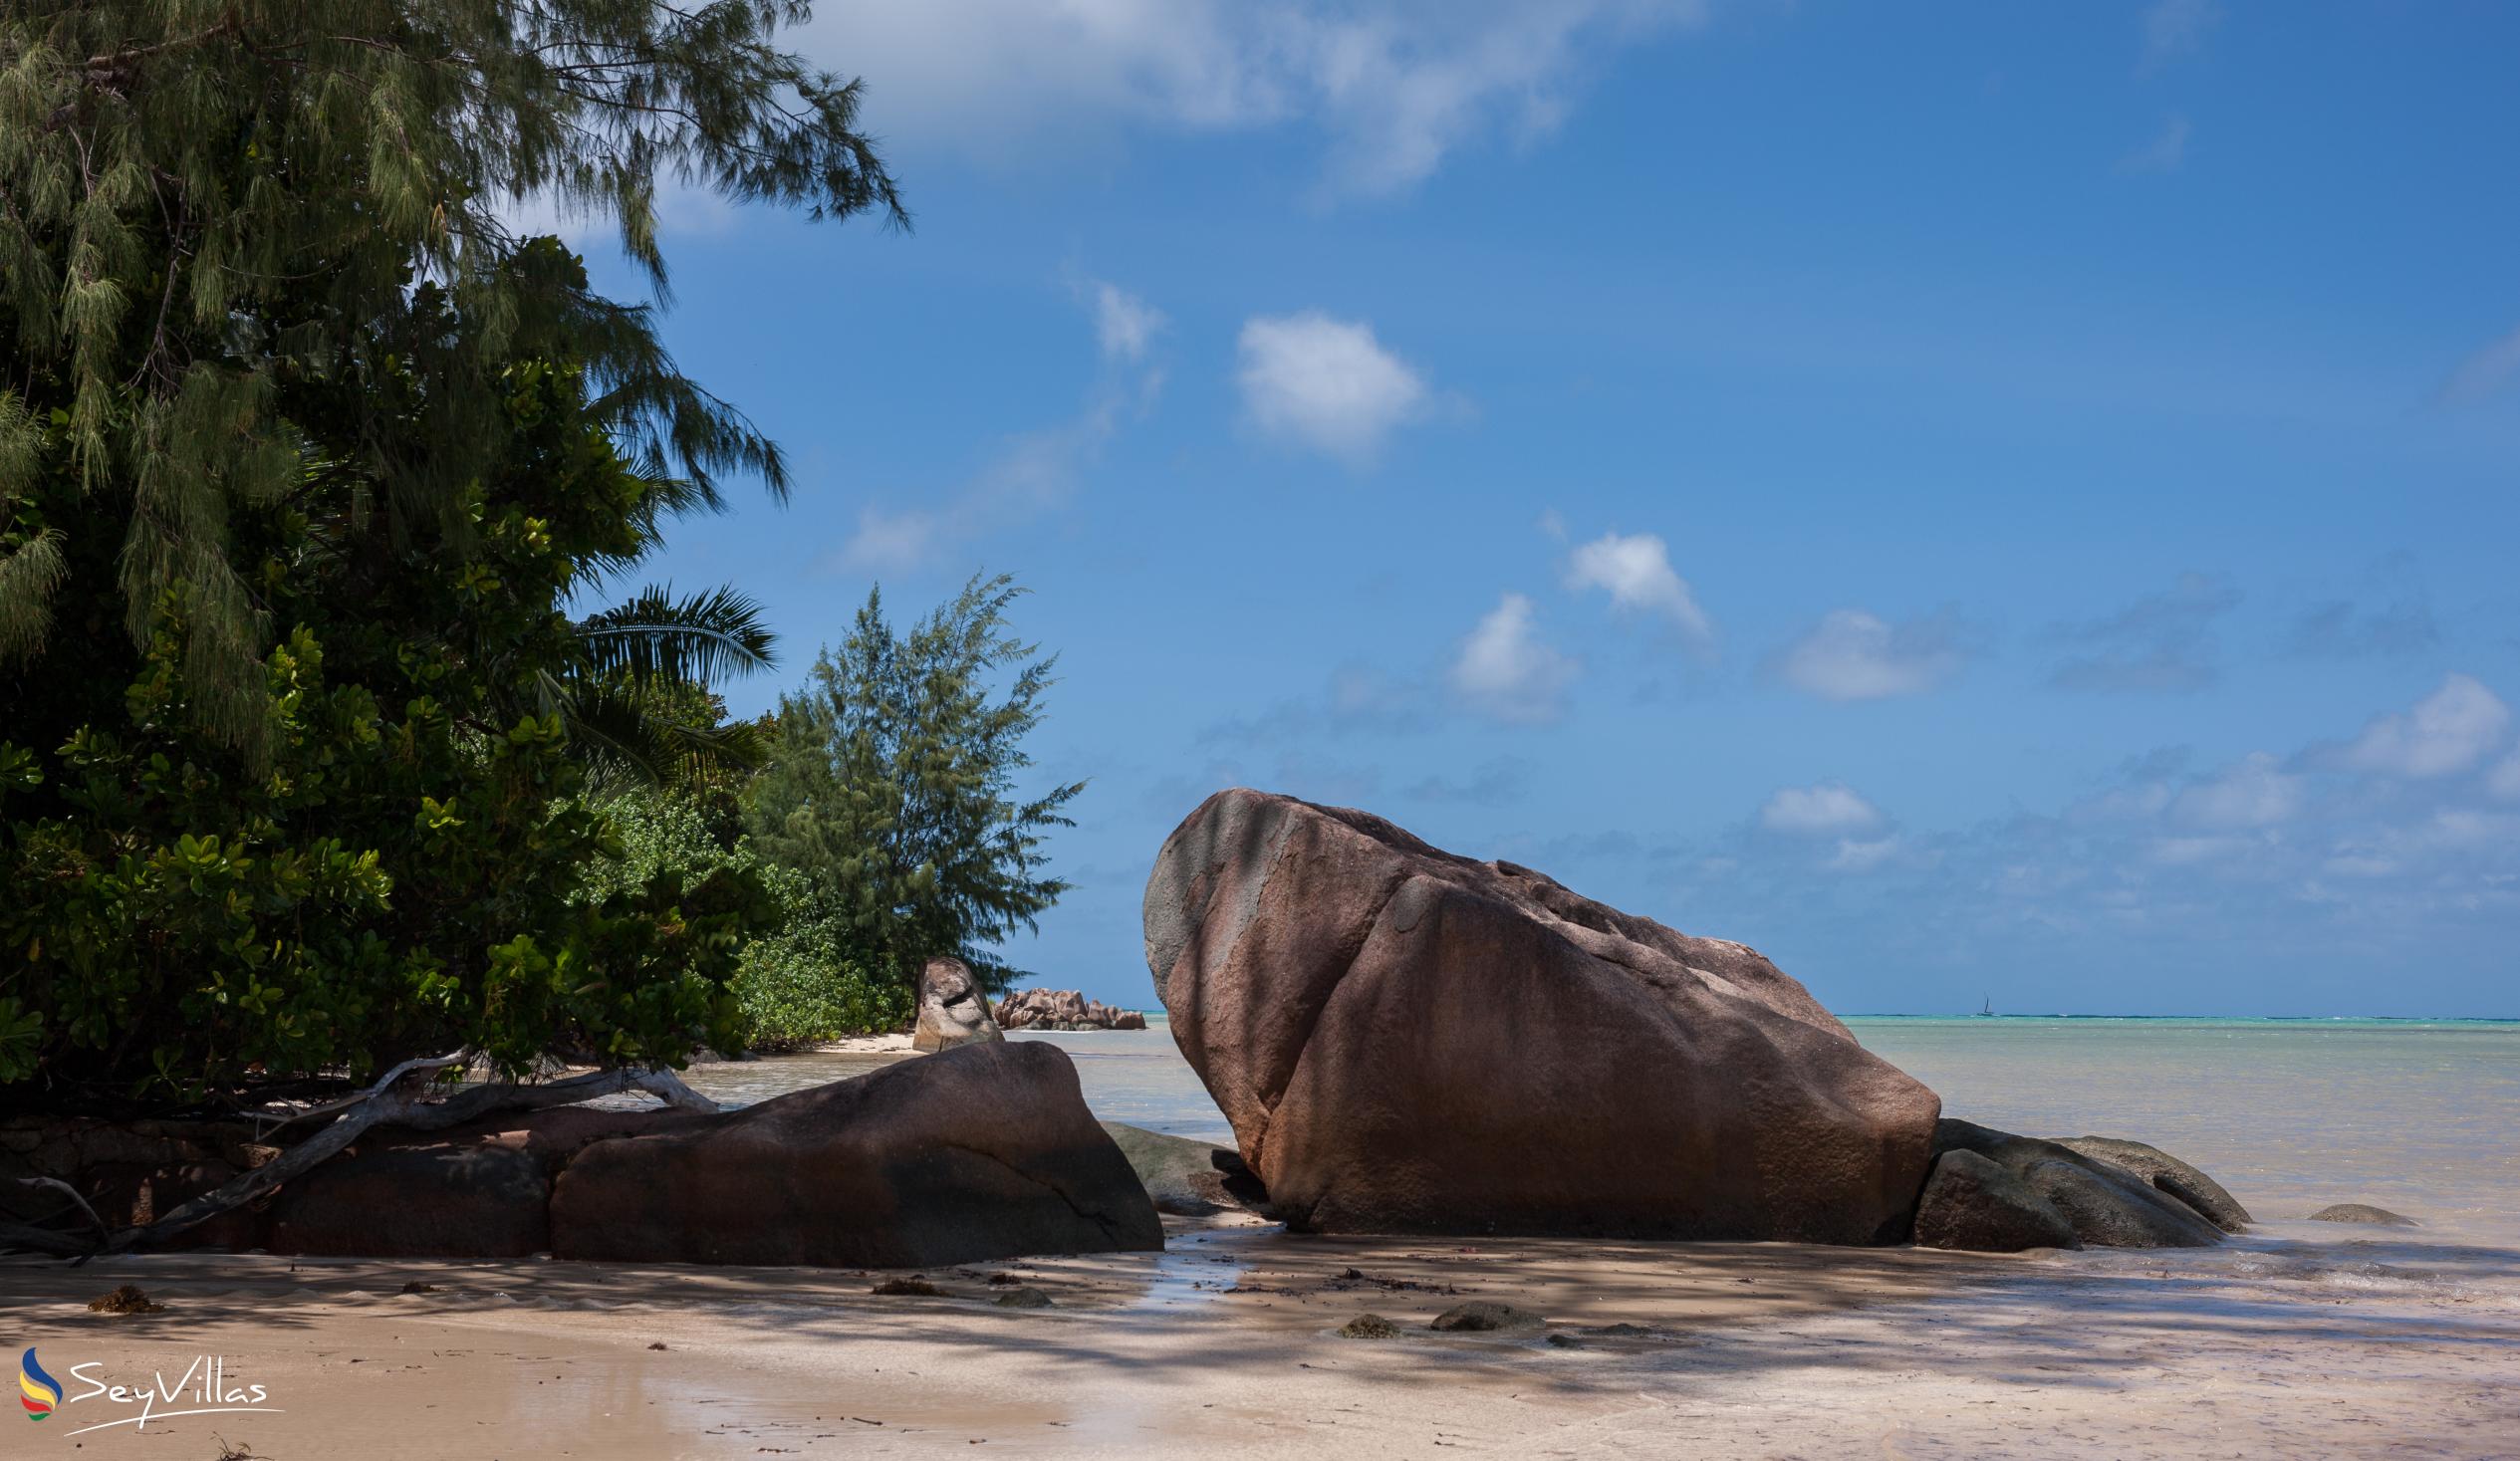 Photo 8: Anse Citron - Praslin (Seychelles)